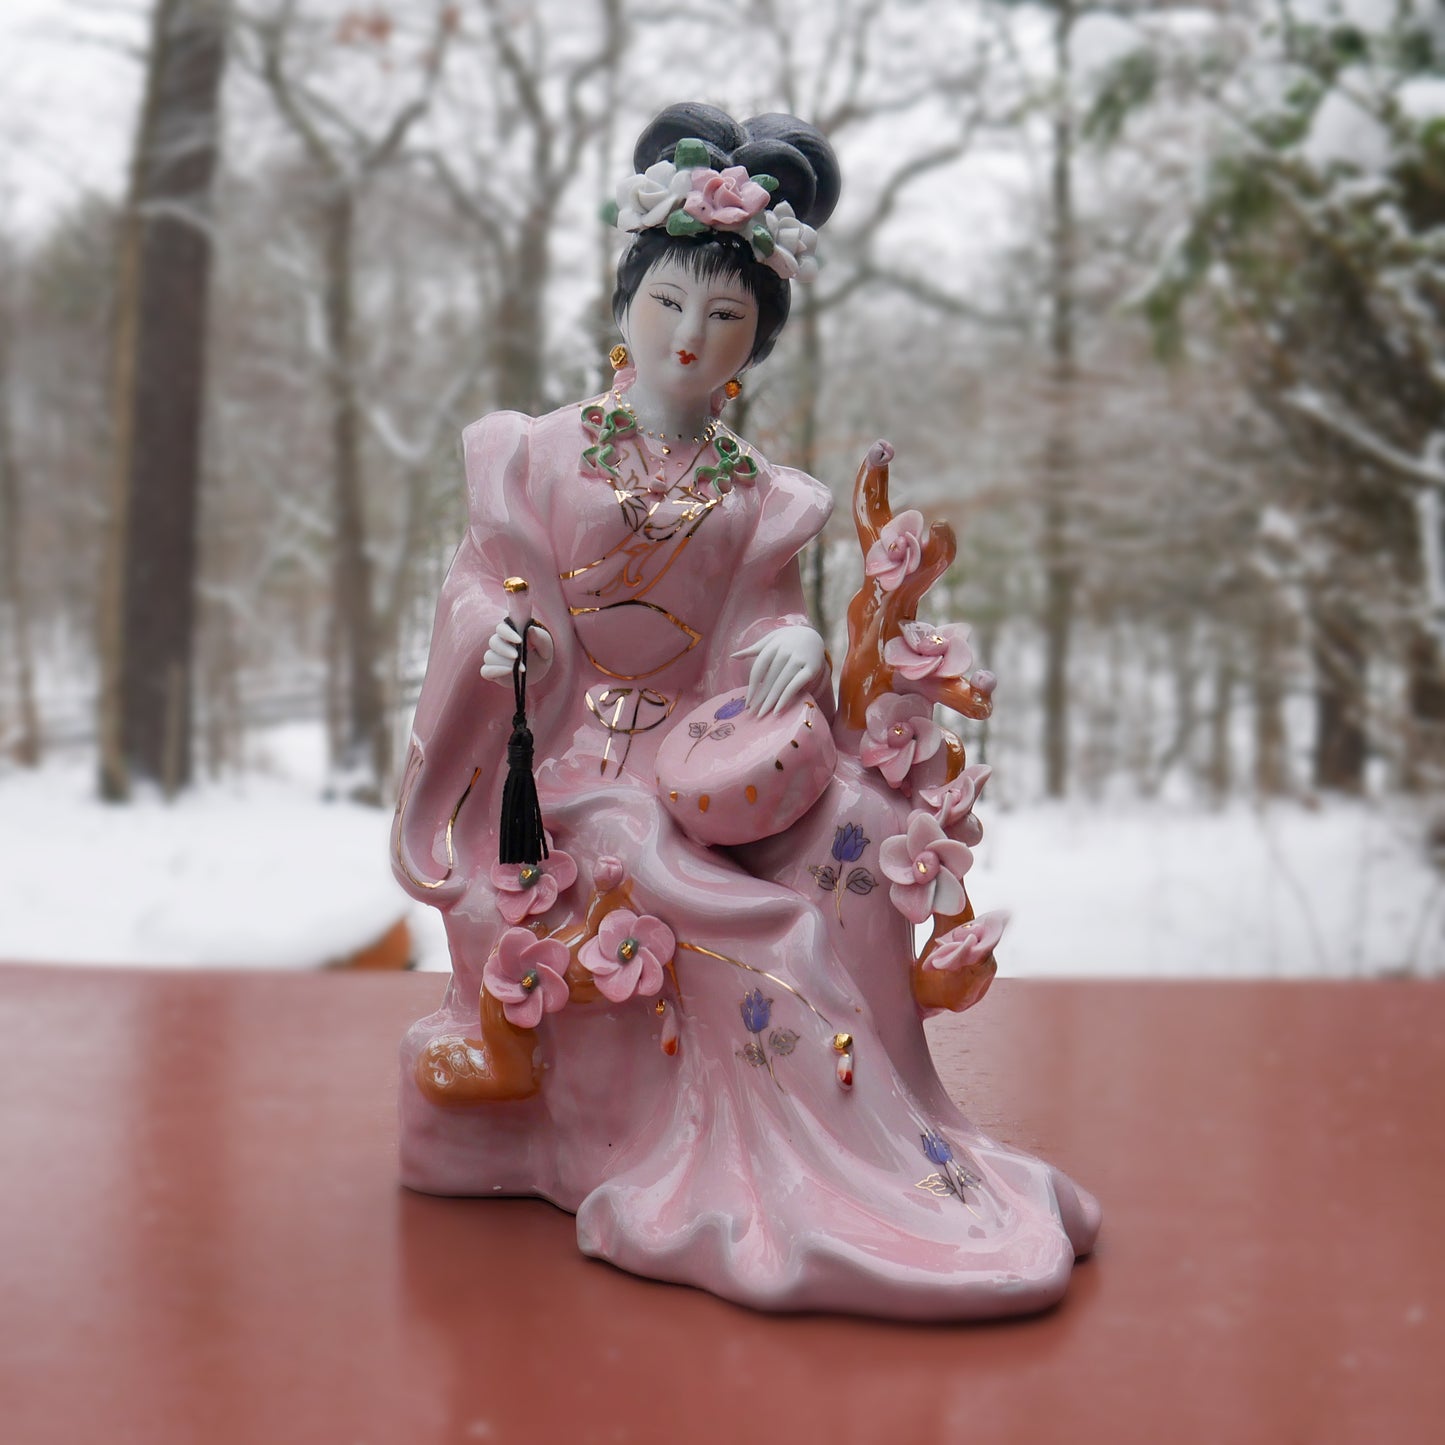 11.5" Porcelain Geisha Statue Sculpture - Amazing Detail - Handmade Collectible